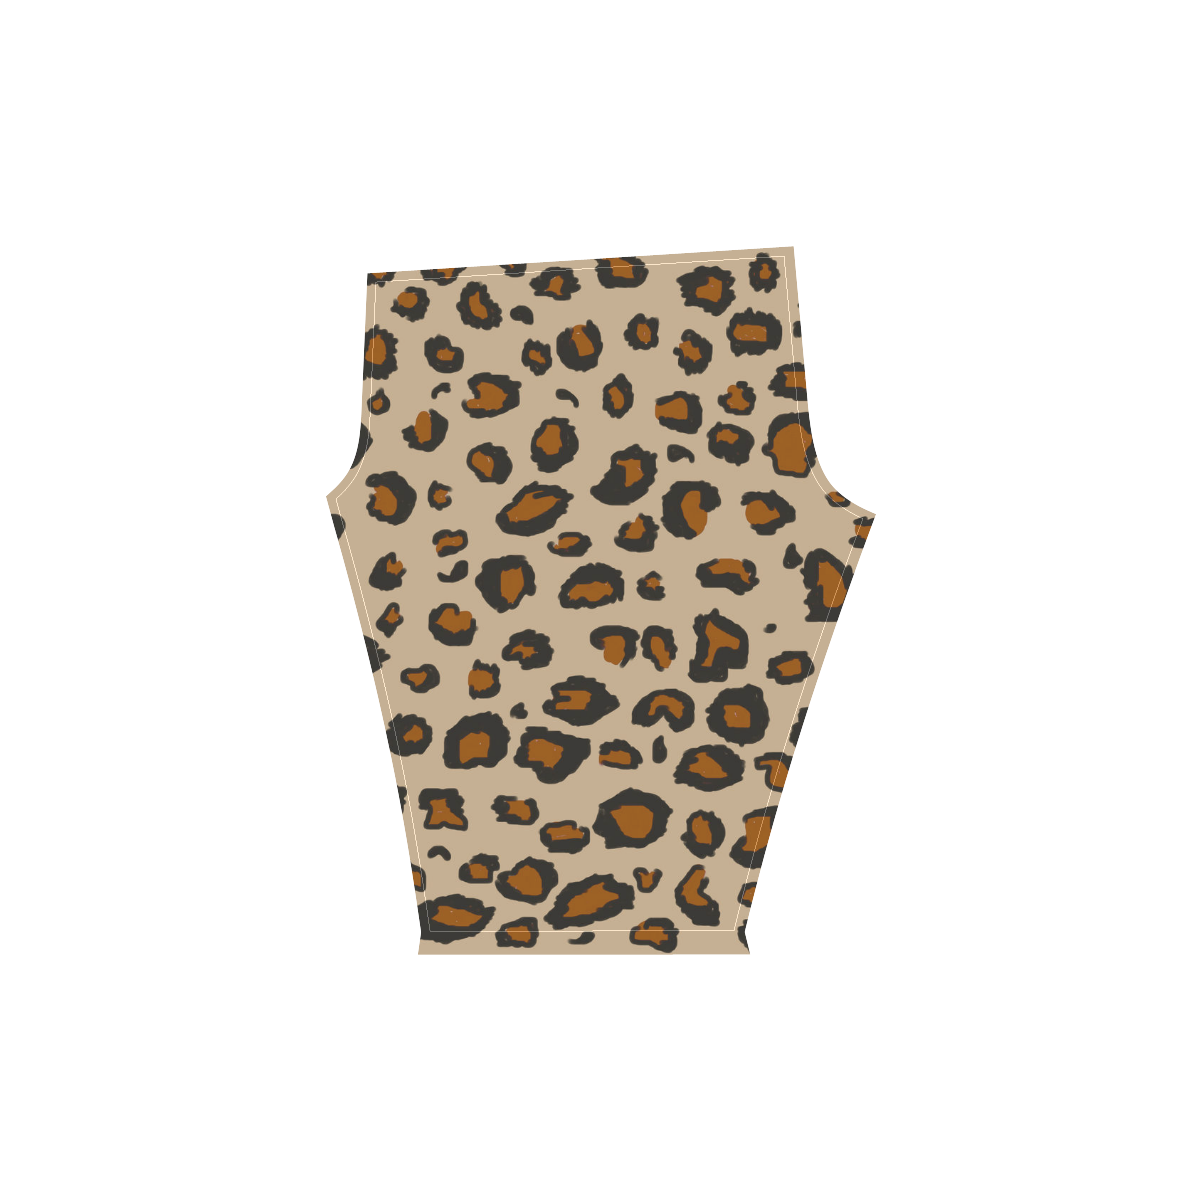 Leopard Print Women's Low Rise Capri Leggings (Invisible Stitch) (Model L08)